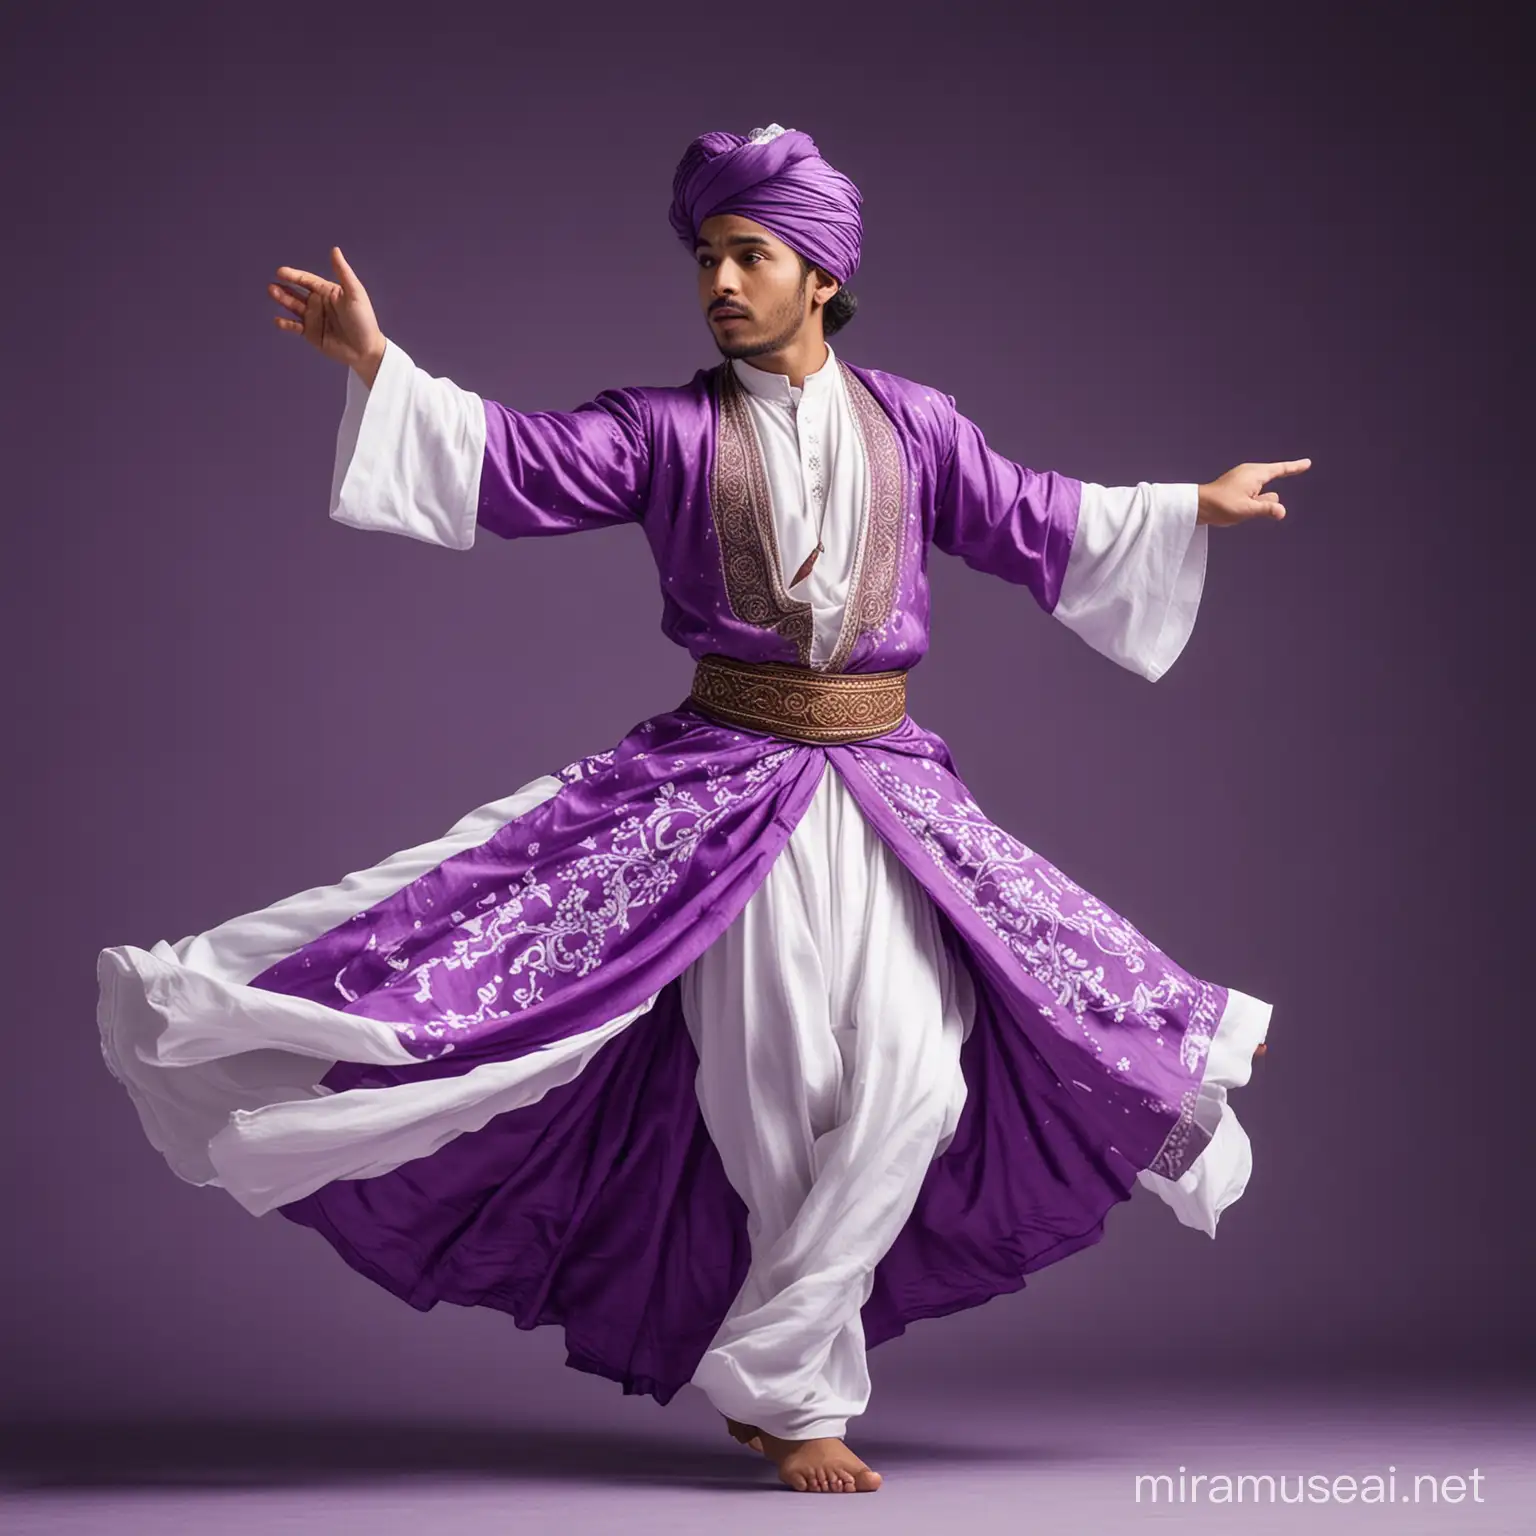 seorang laki laki penari sufi ,usia muda wajah indonesia, badan gemoy, memakai baju sufi warna ungu dan putih, menari berputar putar di atas panggung mewah, sangat realistis, wajah asli manusia, full body
